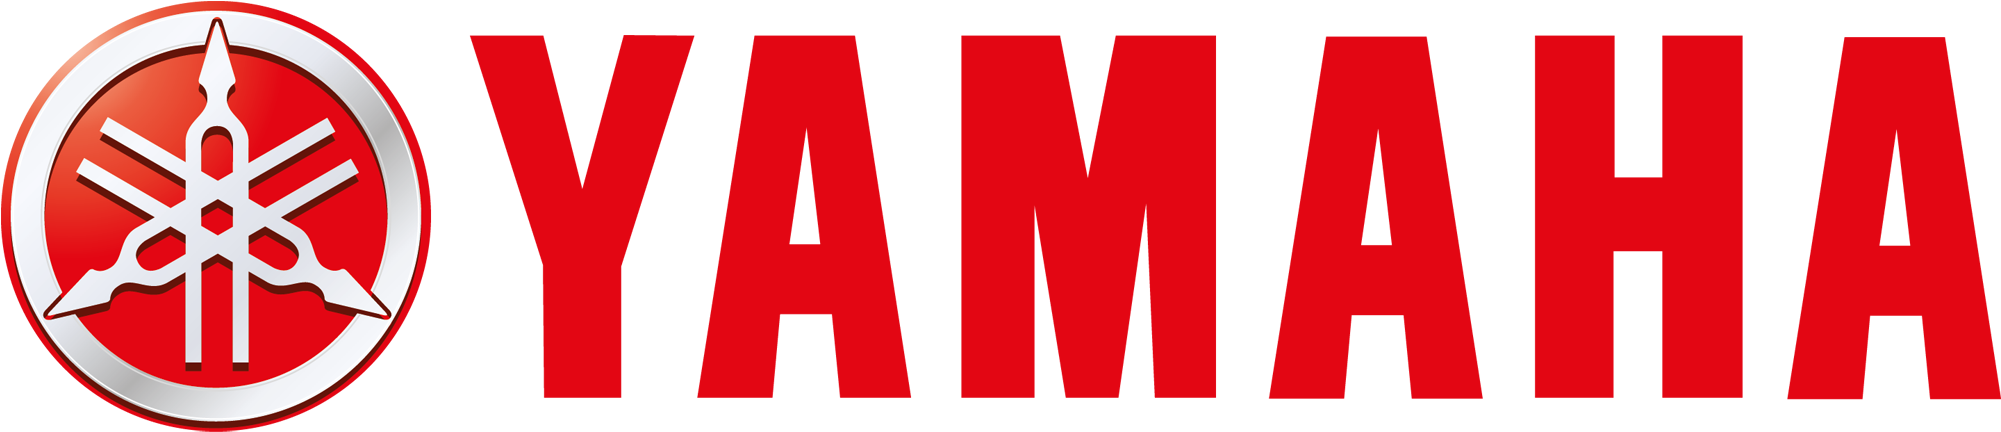 Yamaha Logo Redand White PNG